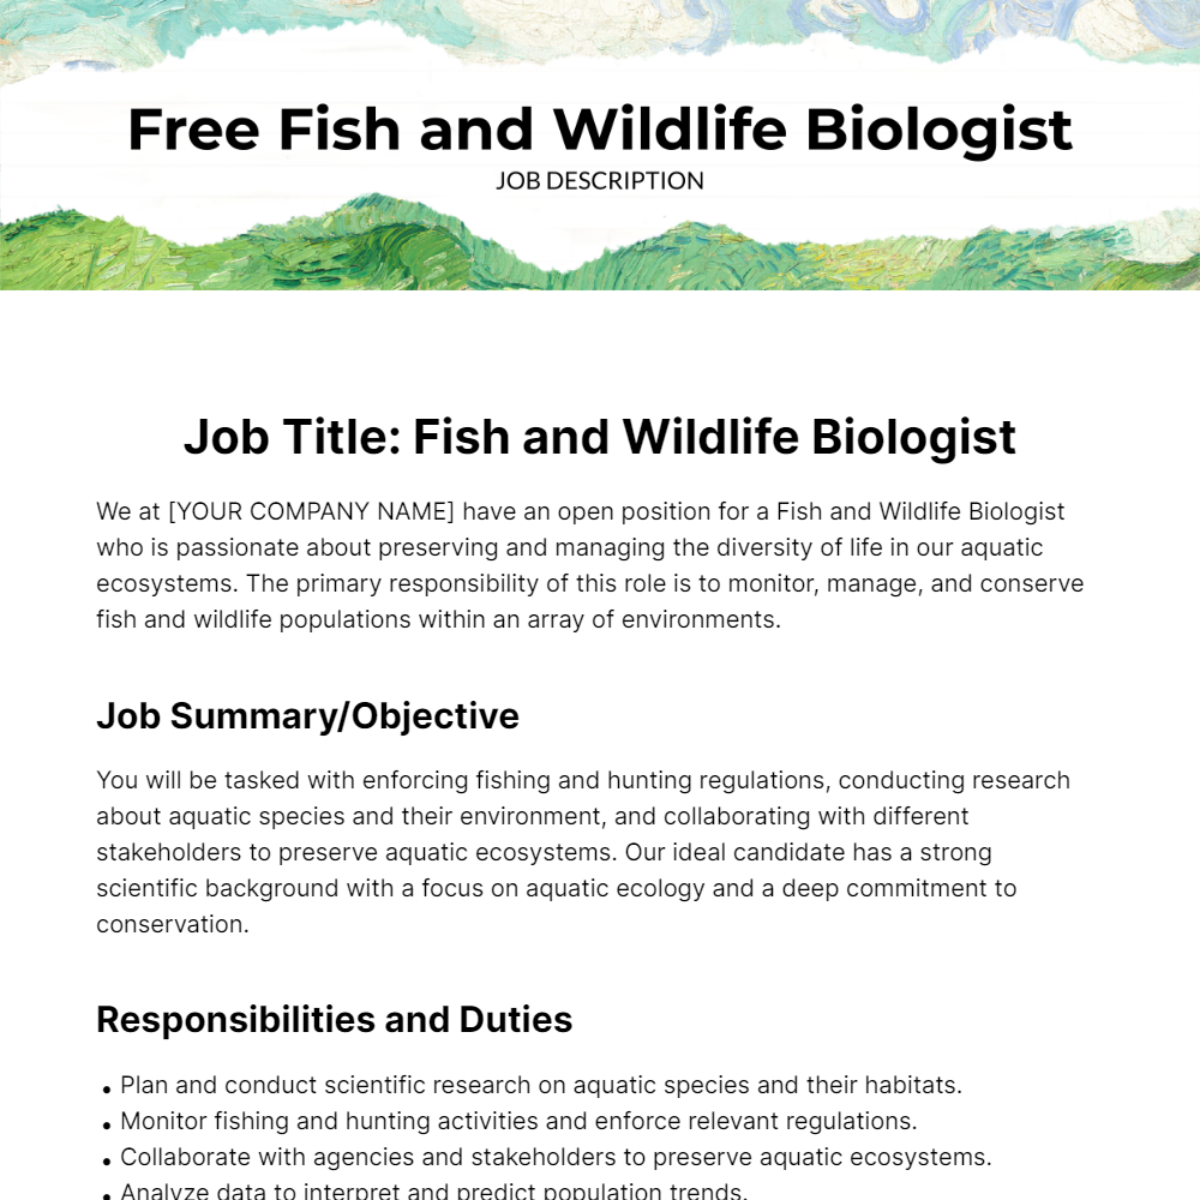 Fish and Wildlife Biologist Job Description Template